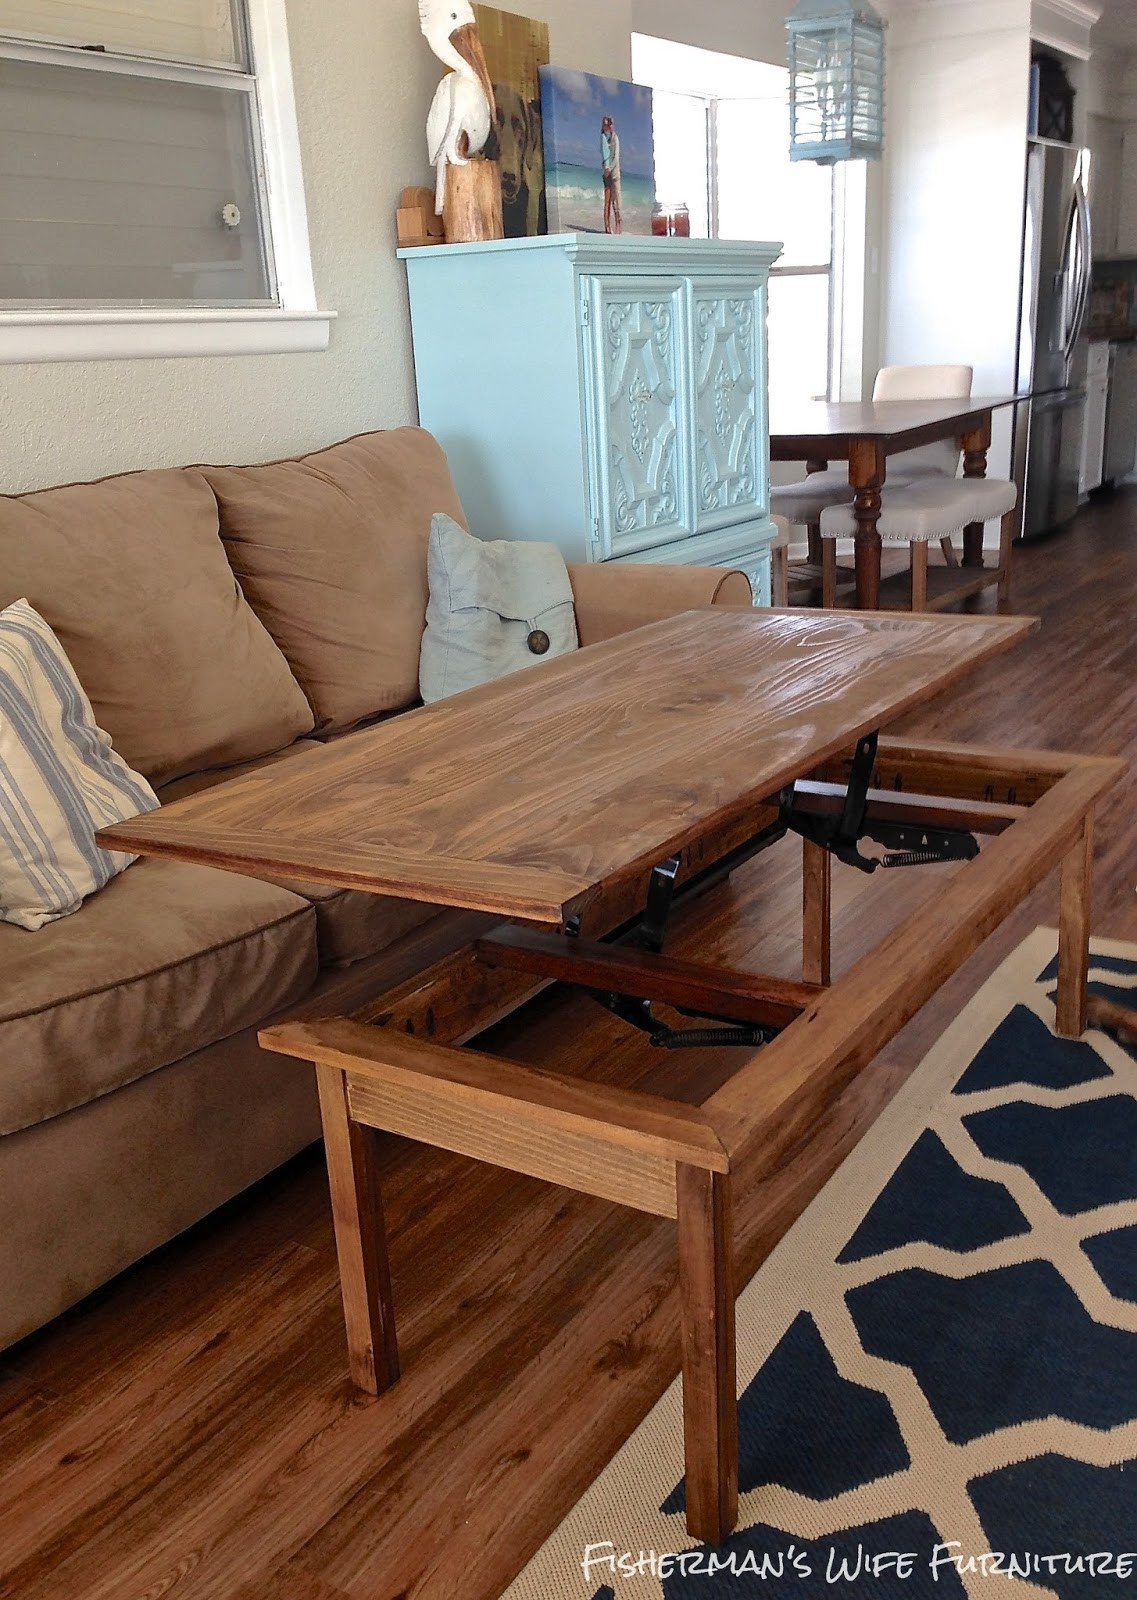 DIY Coffee Tables Plans
 Fisherman s Wife Furniture DIY Coffee Table